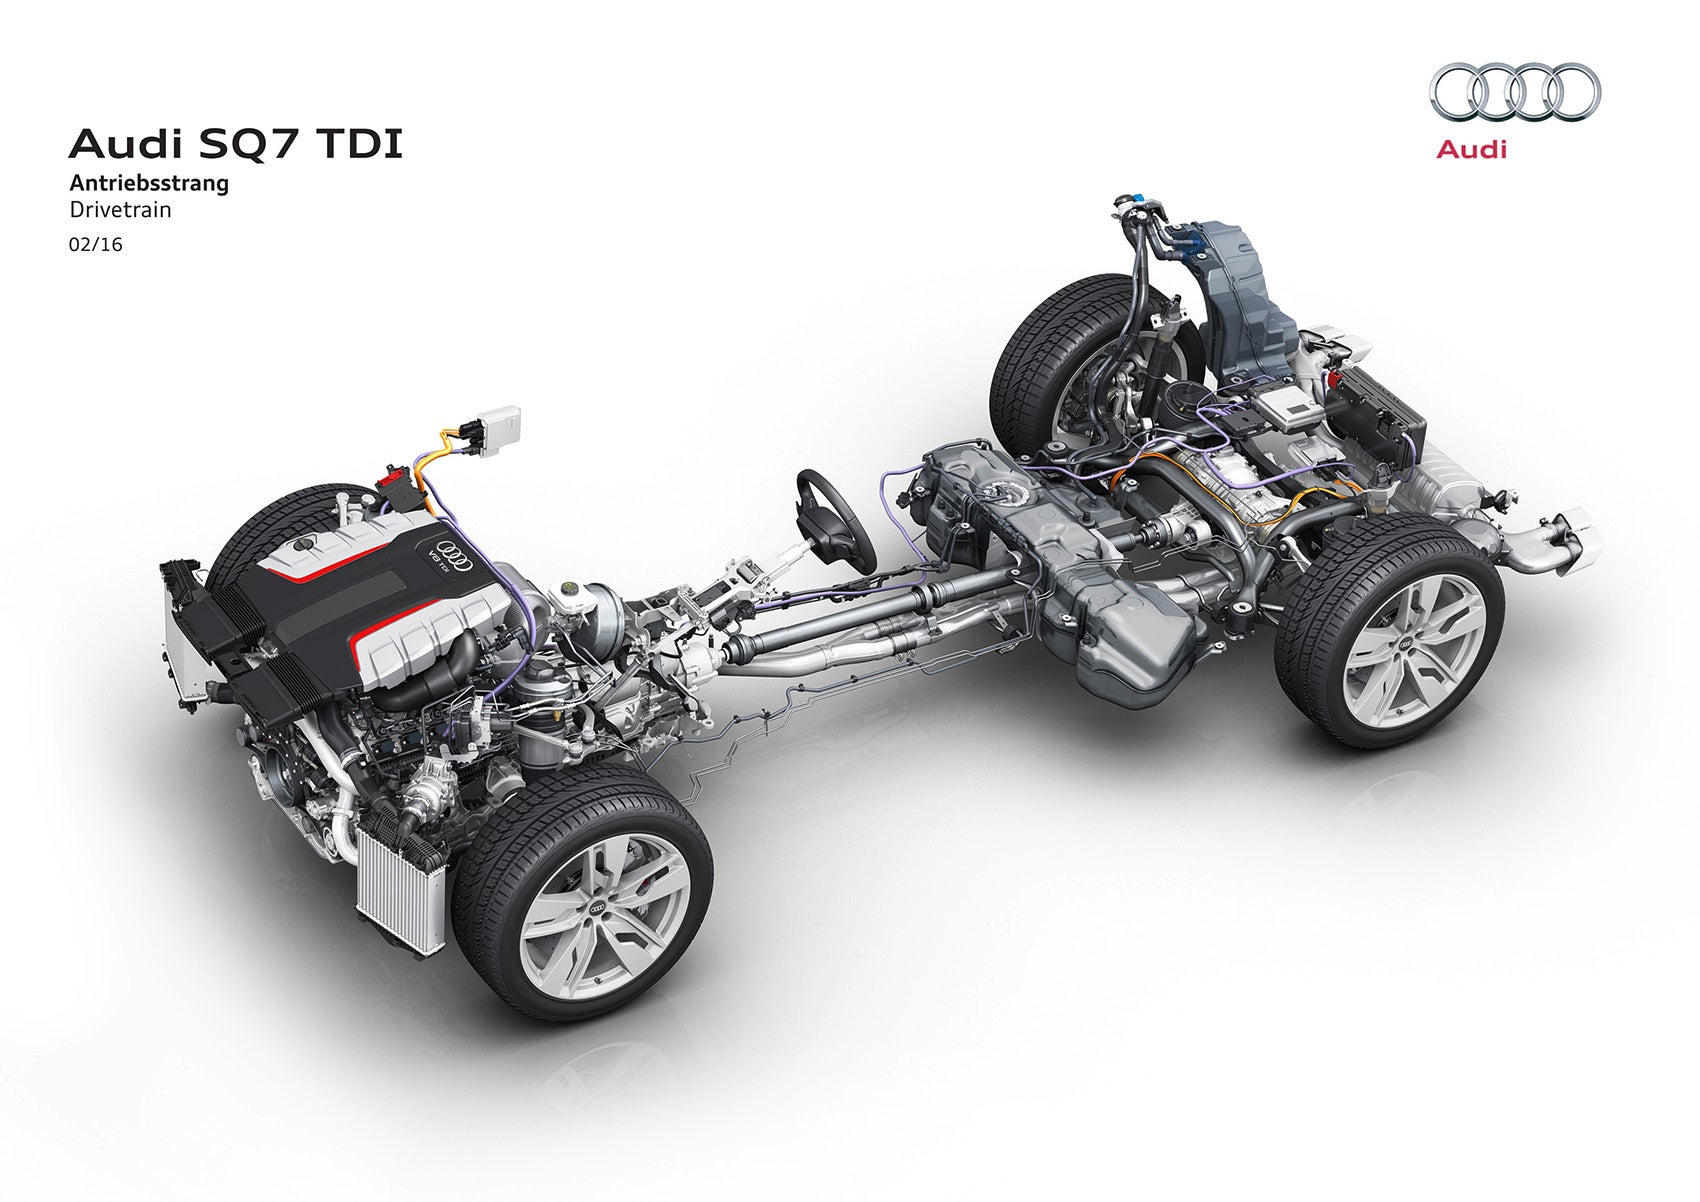 Audi Q7 Driving, Engines & Performance